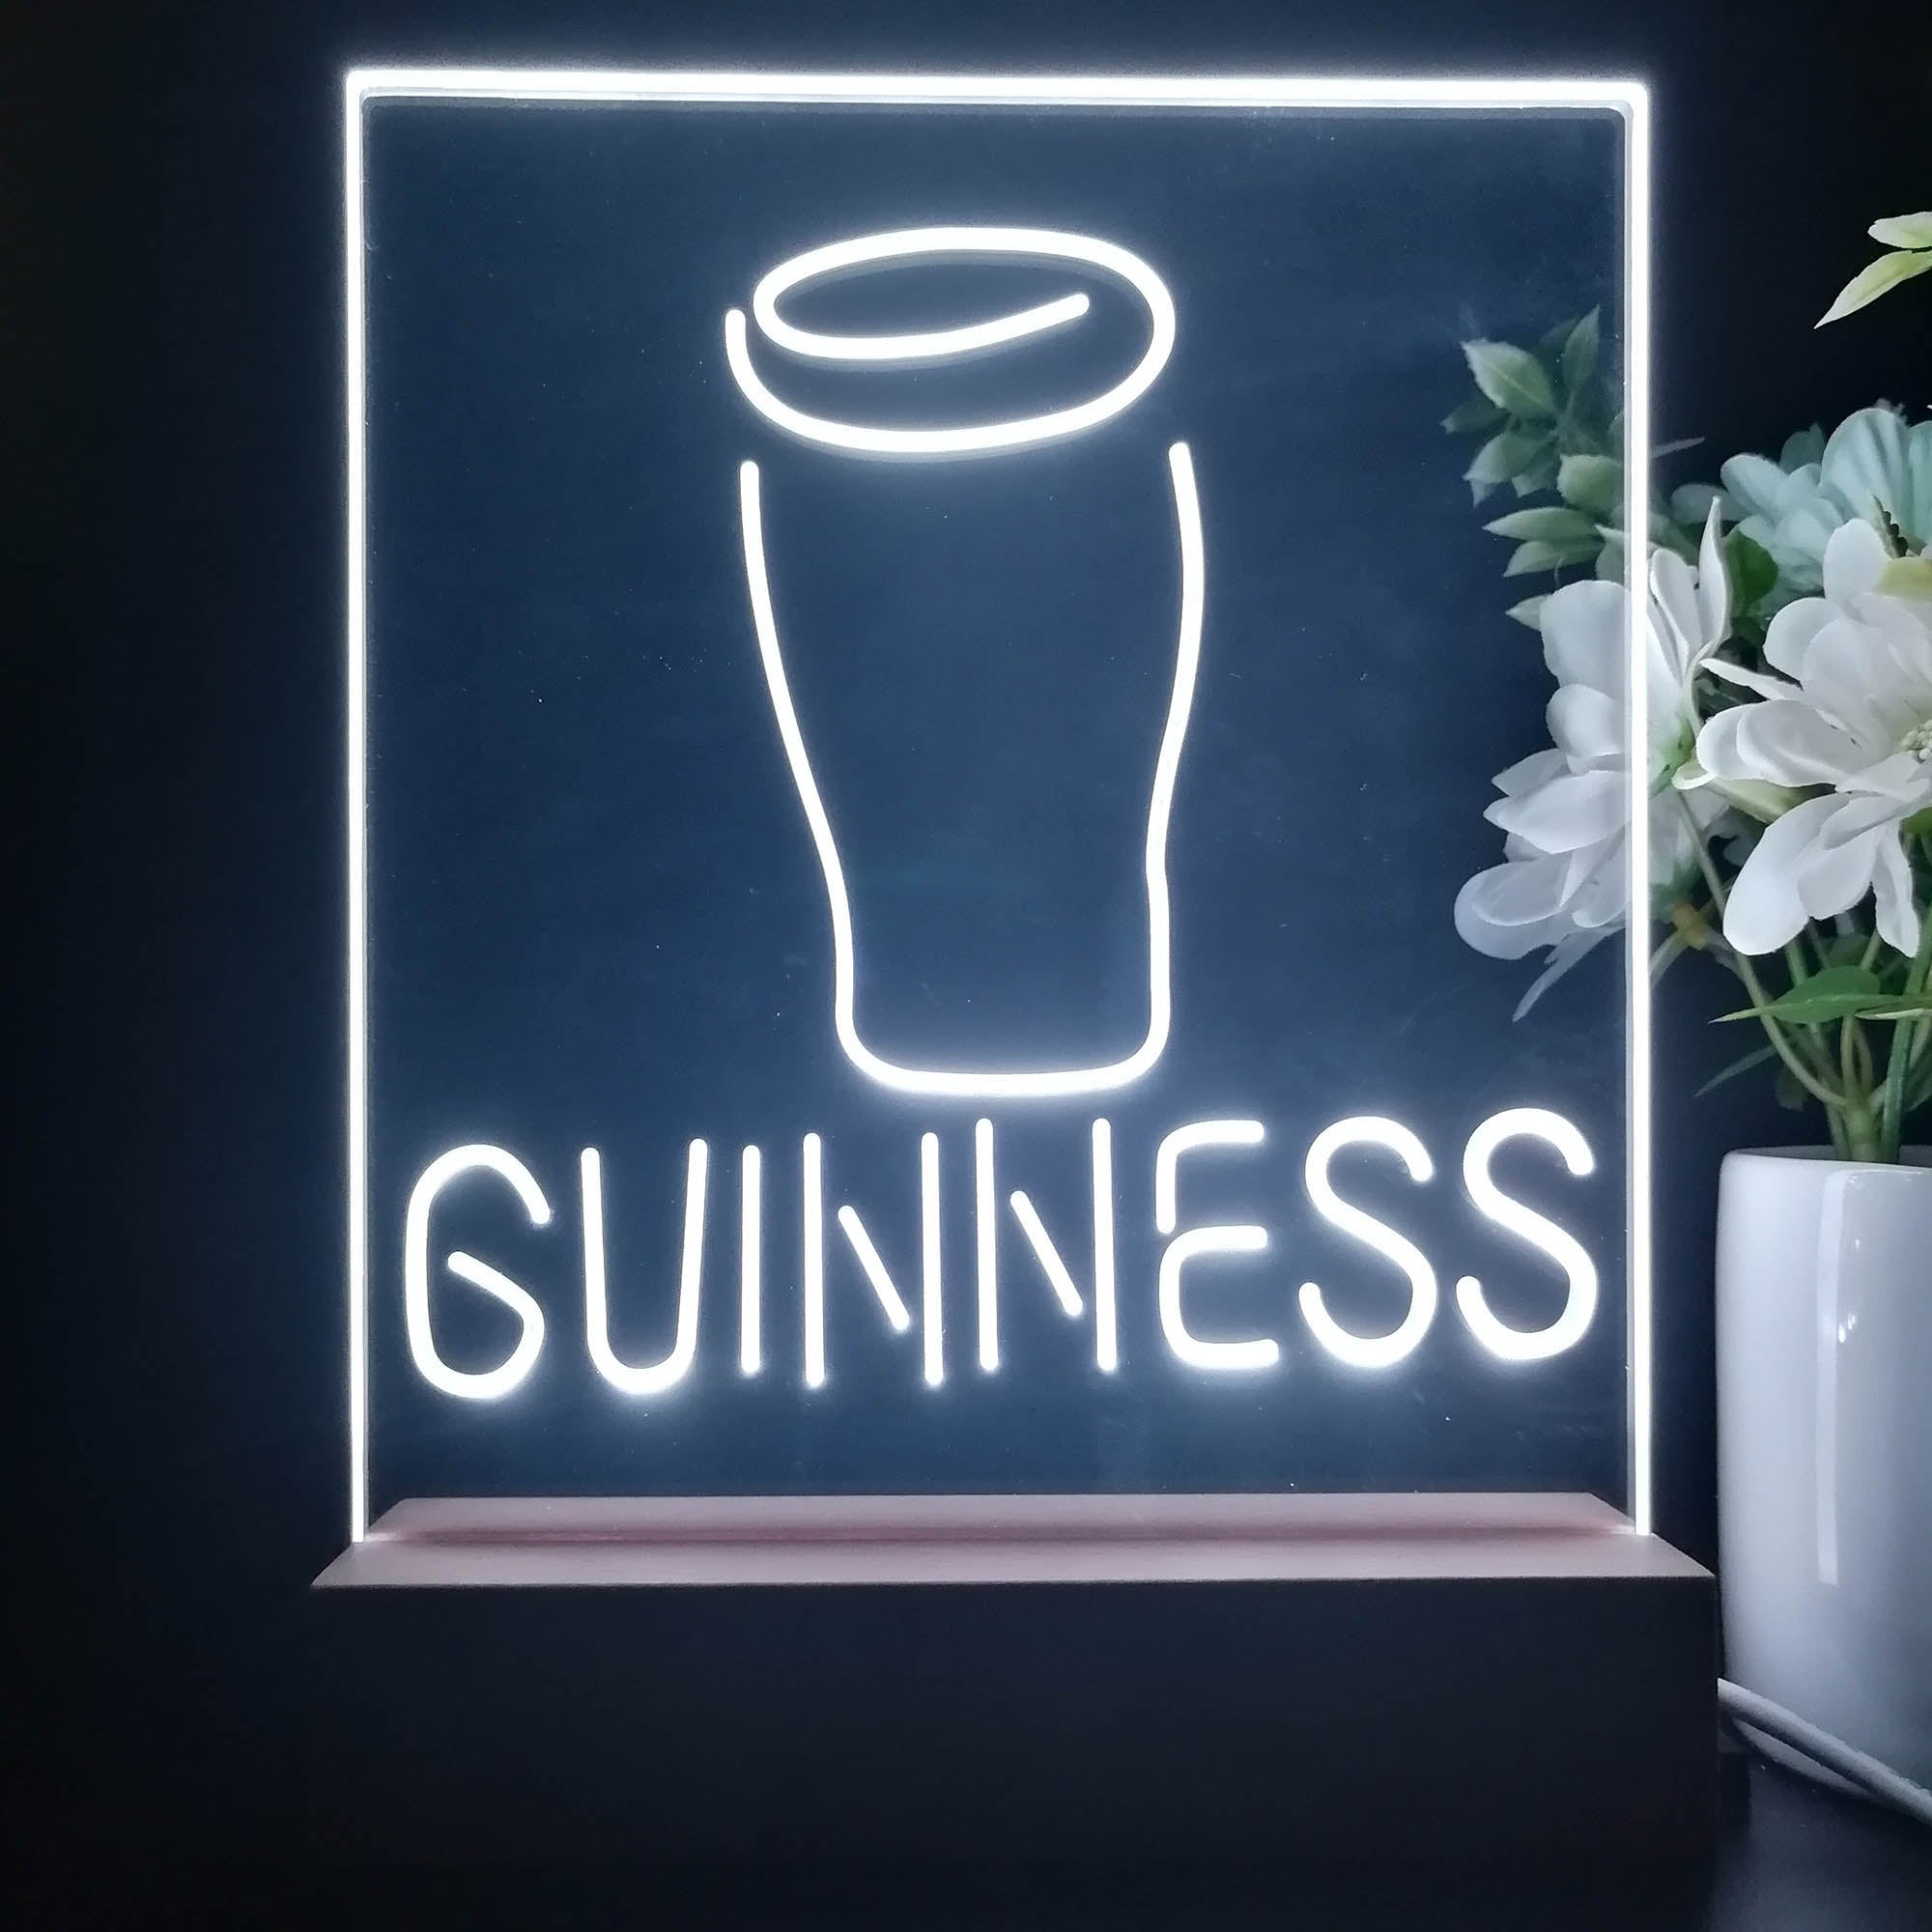 Guinness Glass Beer on tap Bar Decor 3D Illusion Night Light Desk Lamp